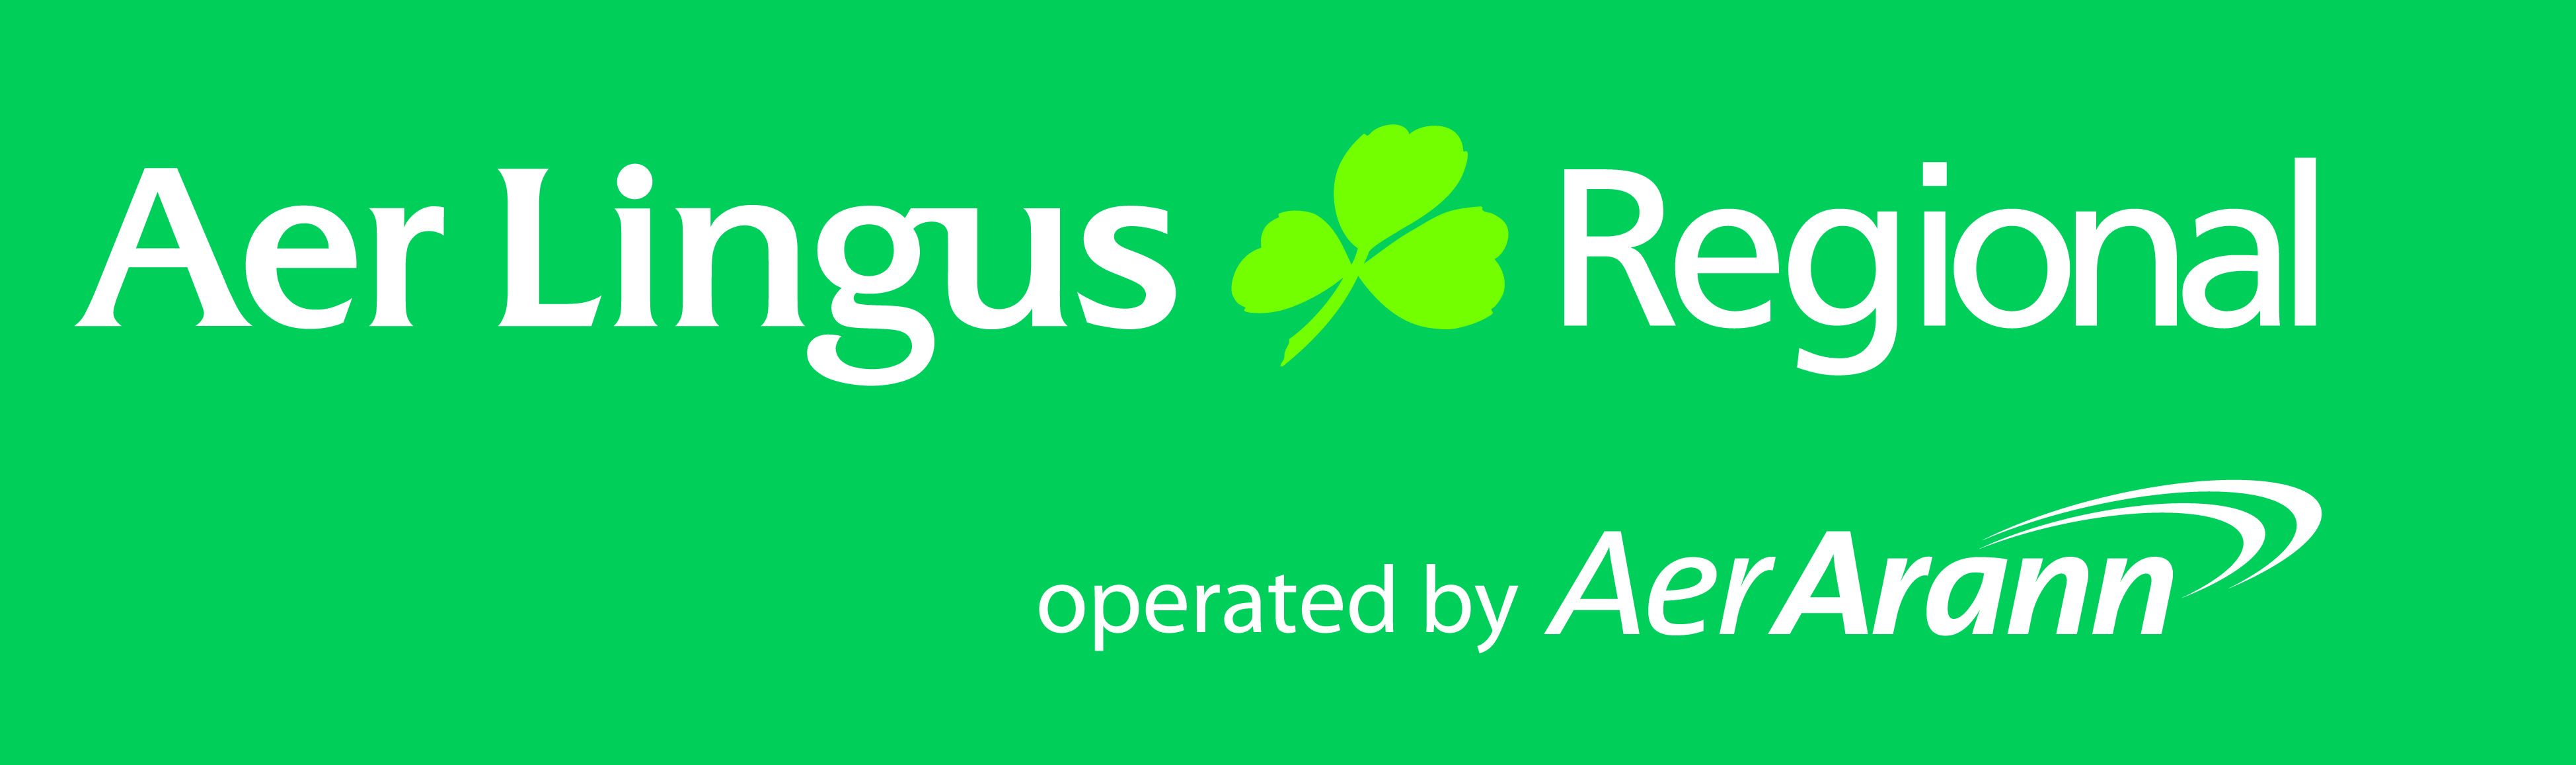 Aer Lingus Regional logo